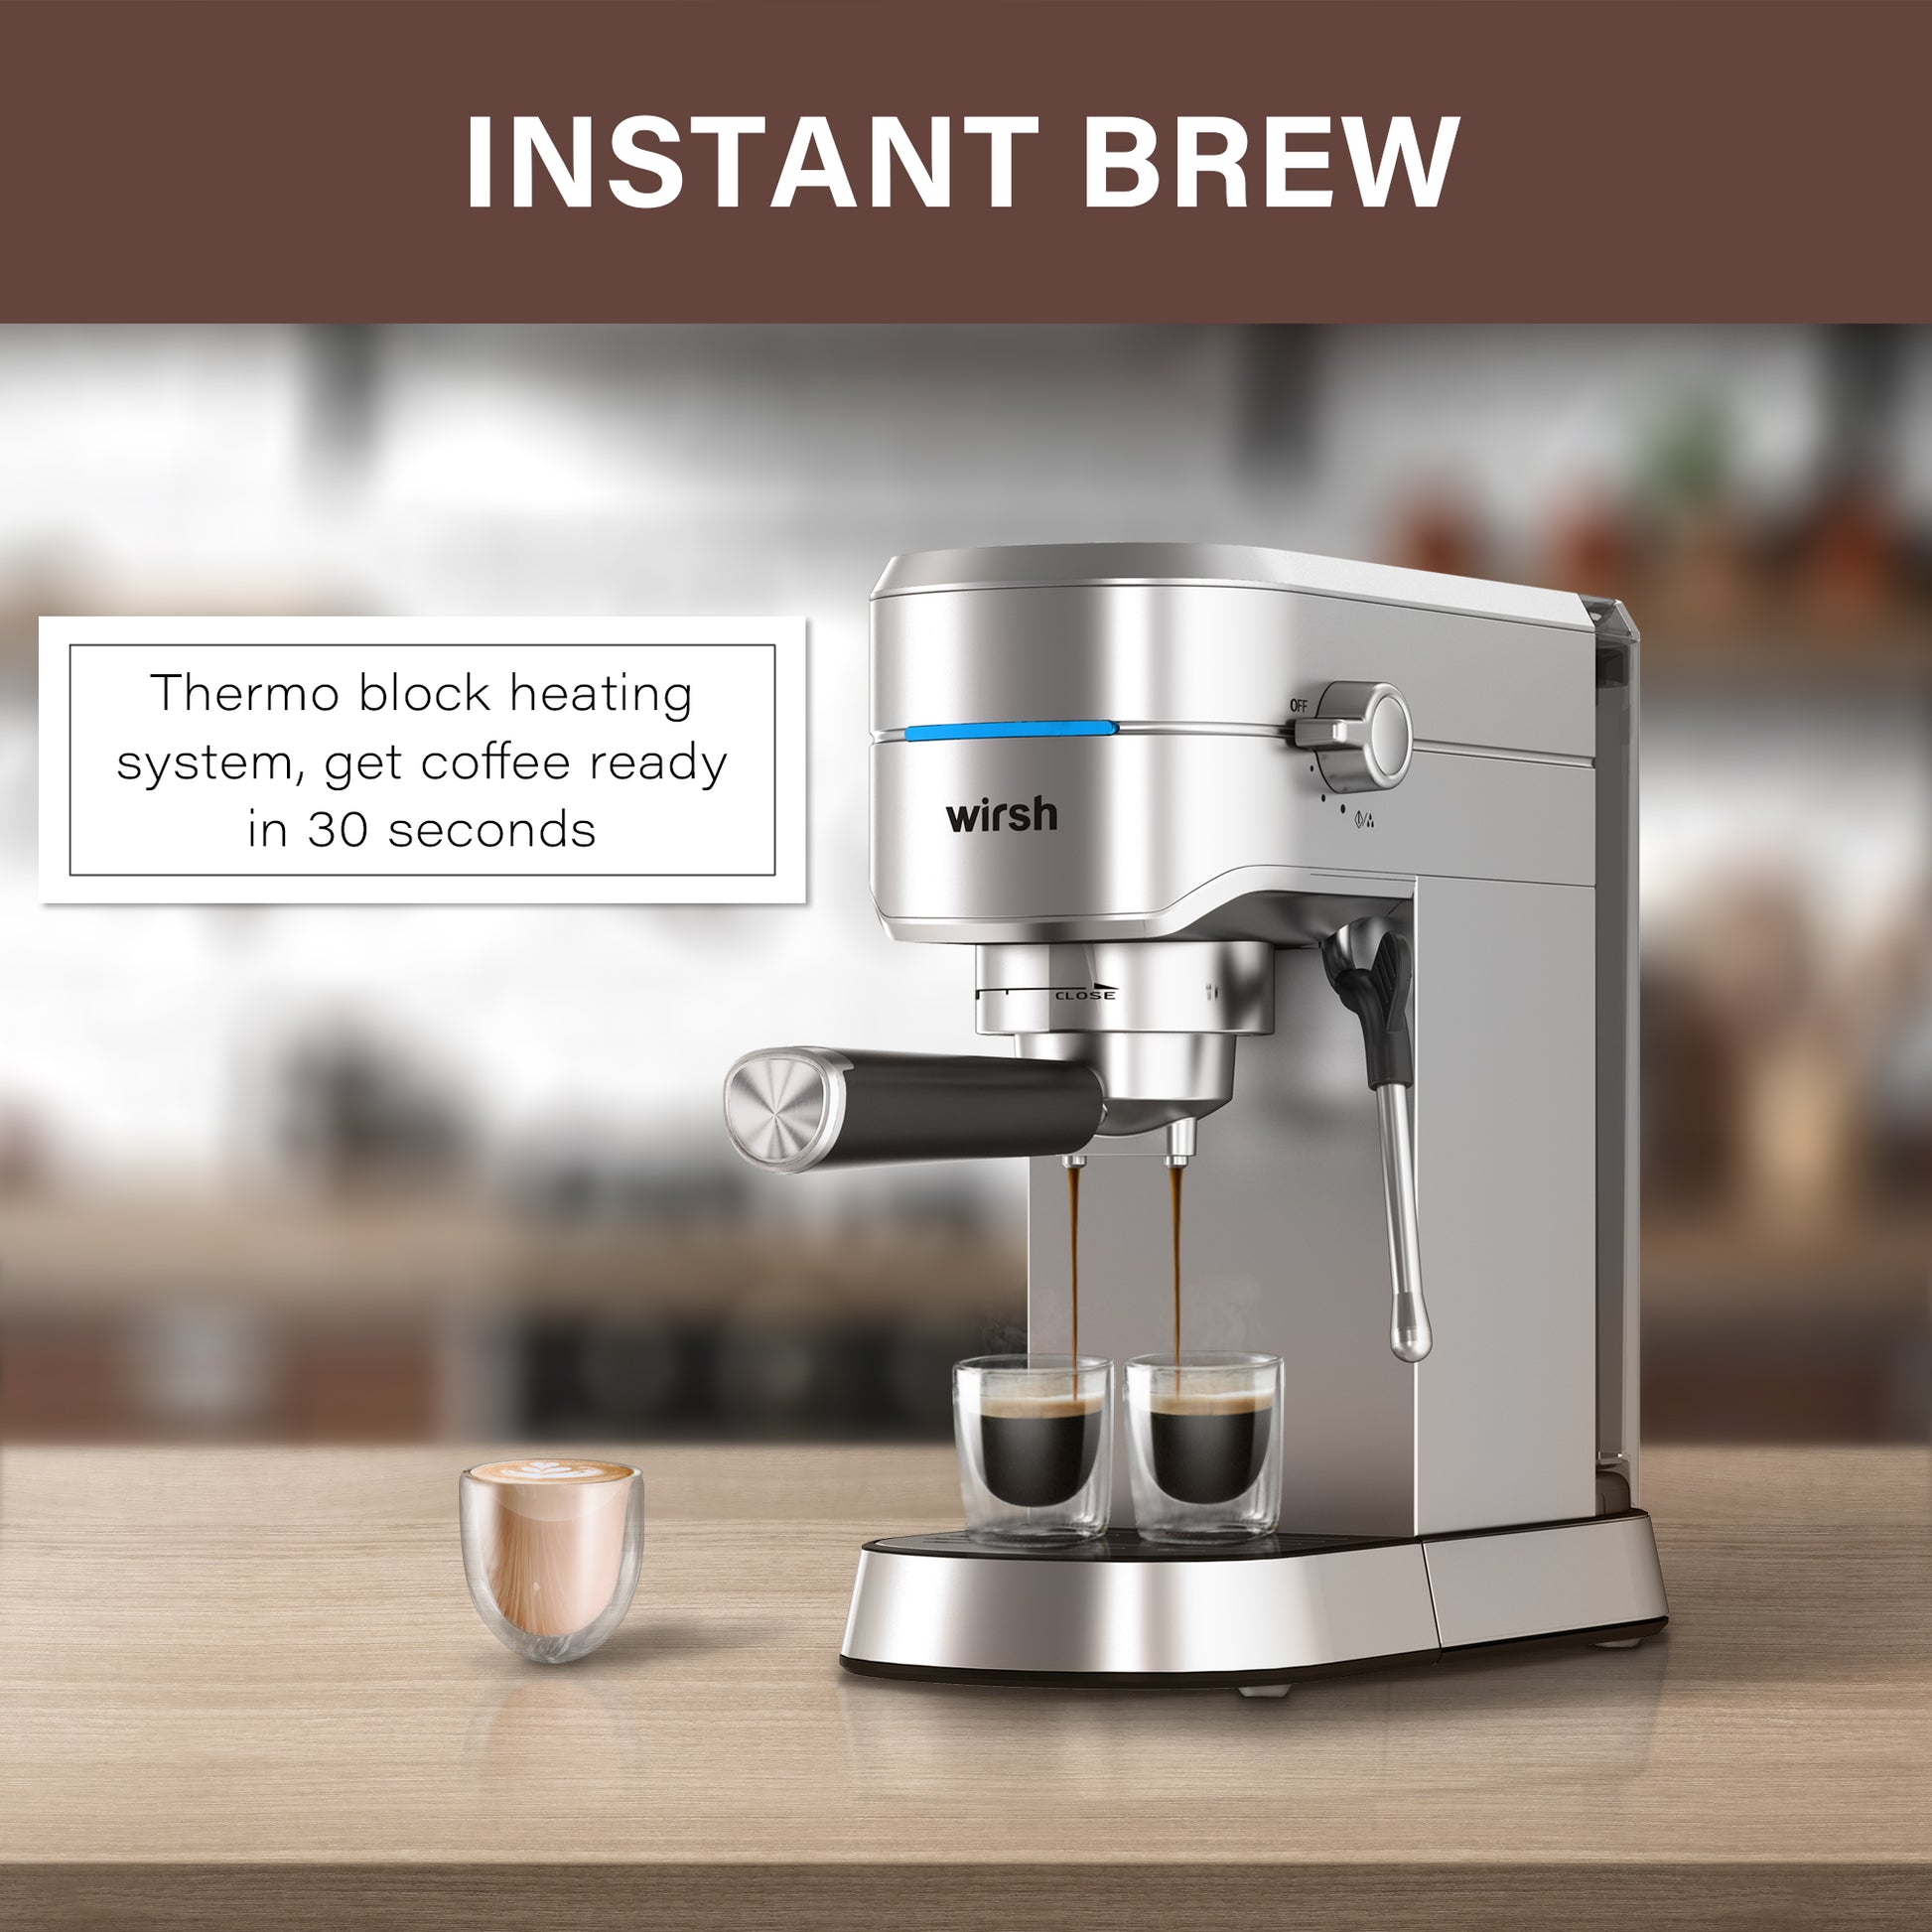 <img src="espresso machine.jpg" alt="wirsh 15 bar espresso machine instant brew"/>